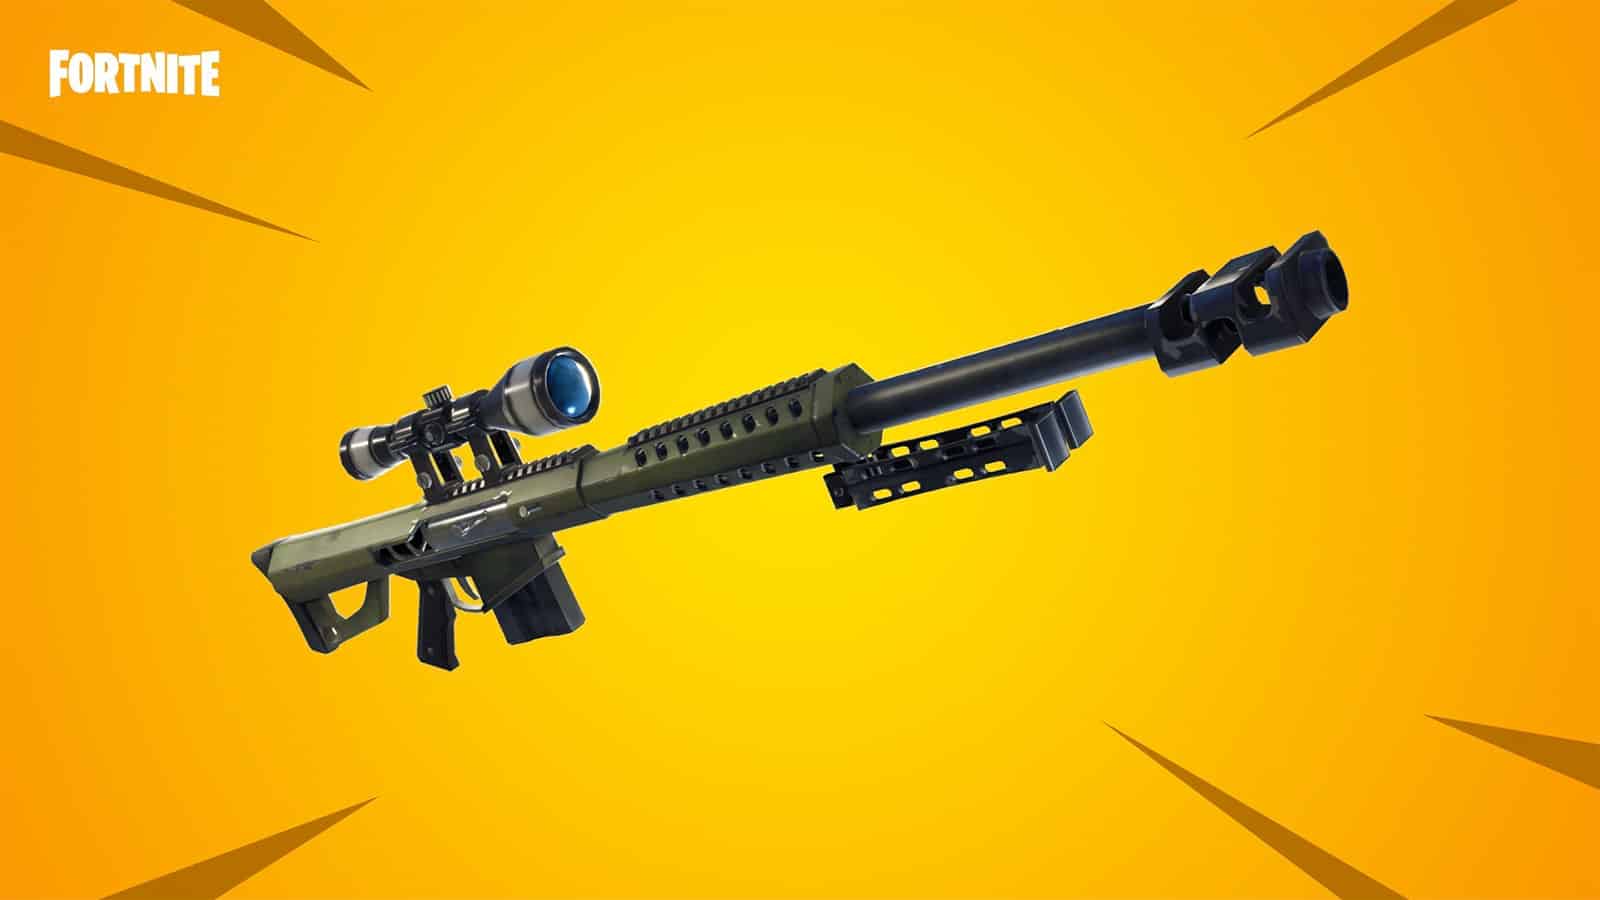 The Heavy Sniper Rifle in Fortnite 20.10 update